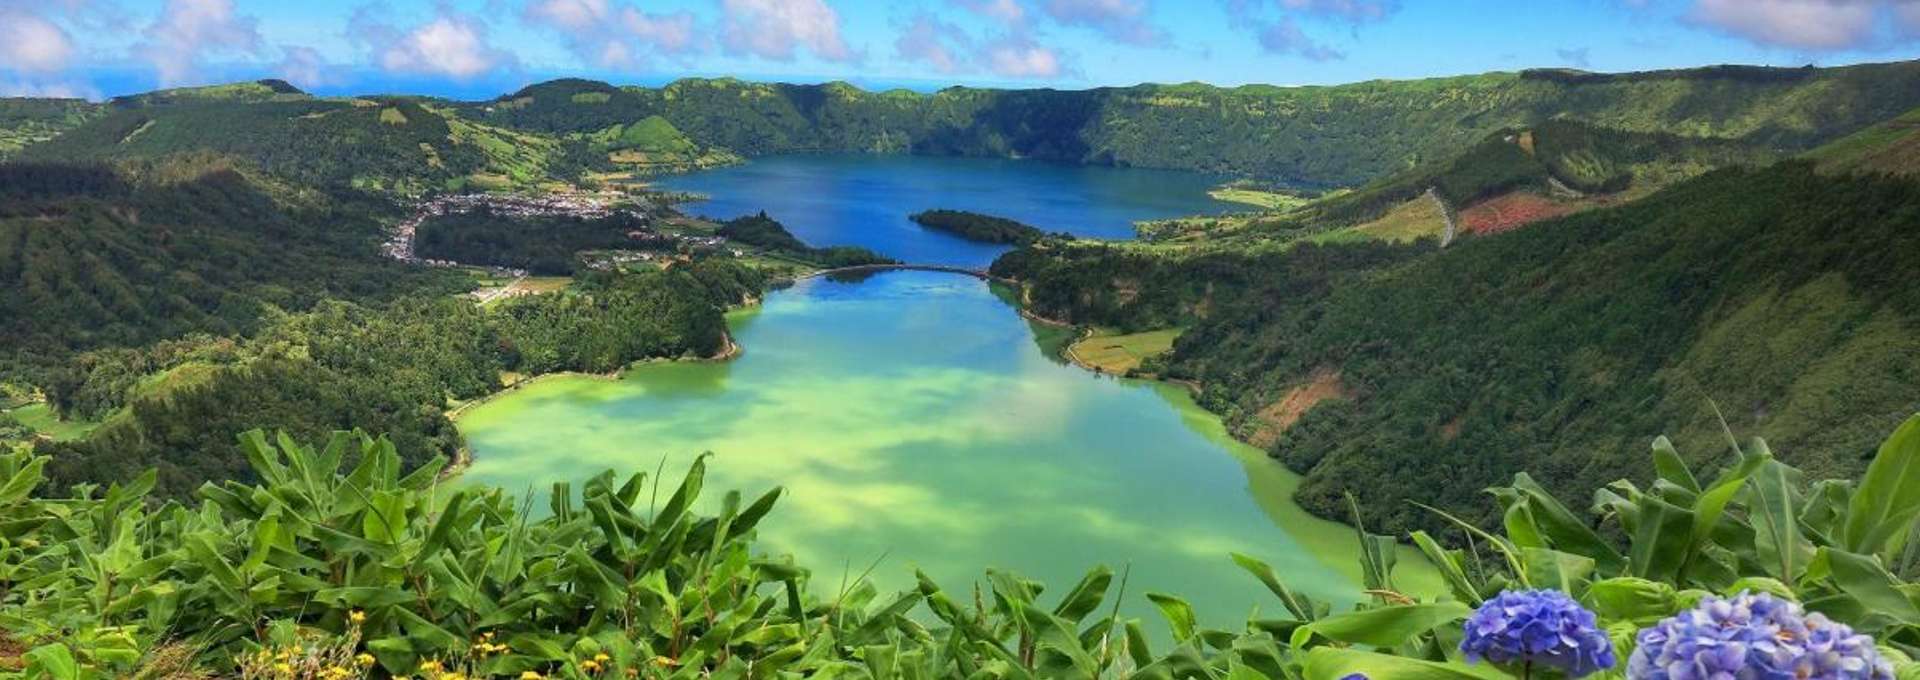 Azores lago azul